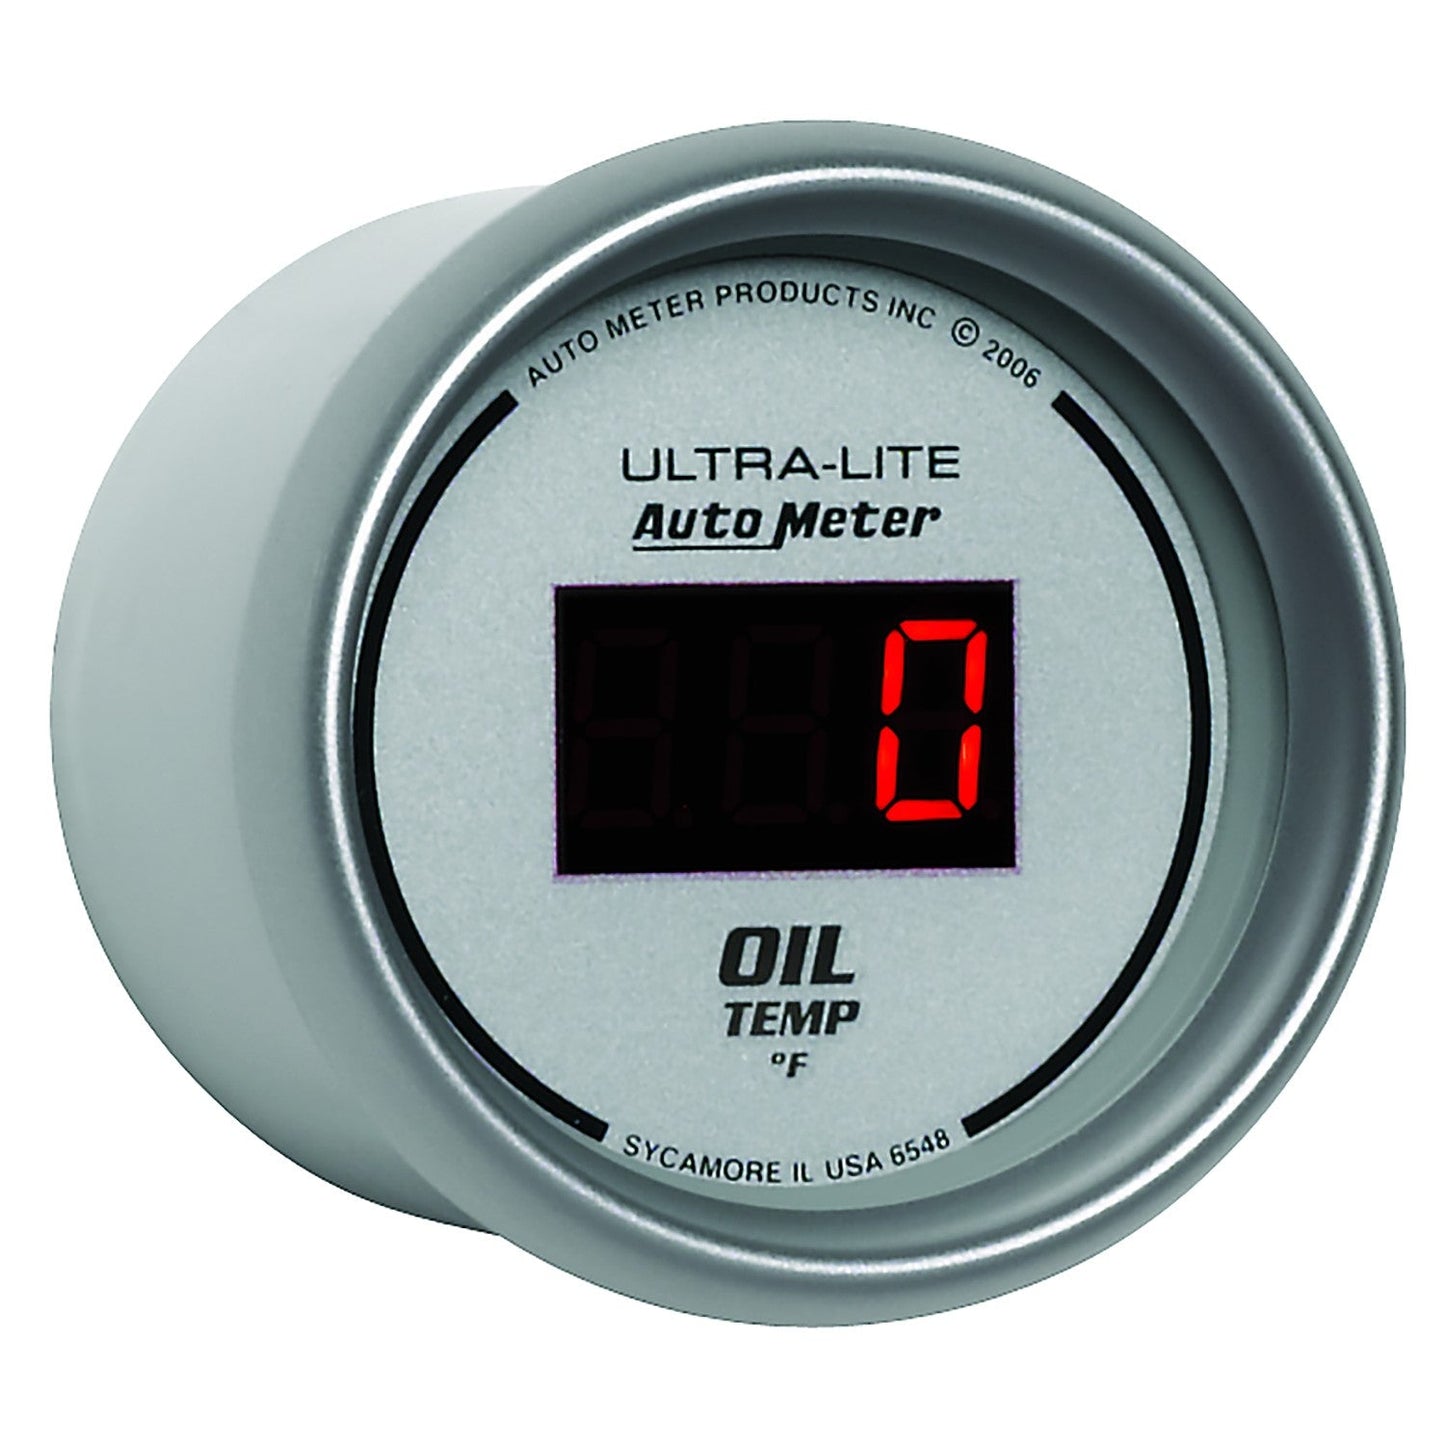 AutoMeter - 2-1/16" OIL TEMPERATURE, 0-340 °F, ULTRA-LITE DIGITAL (6548)